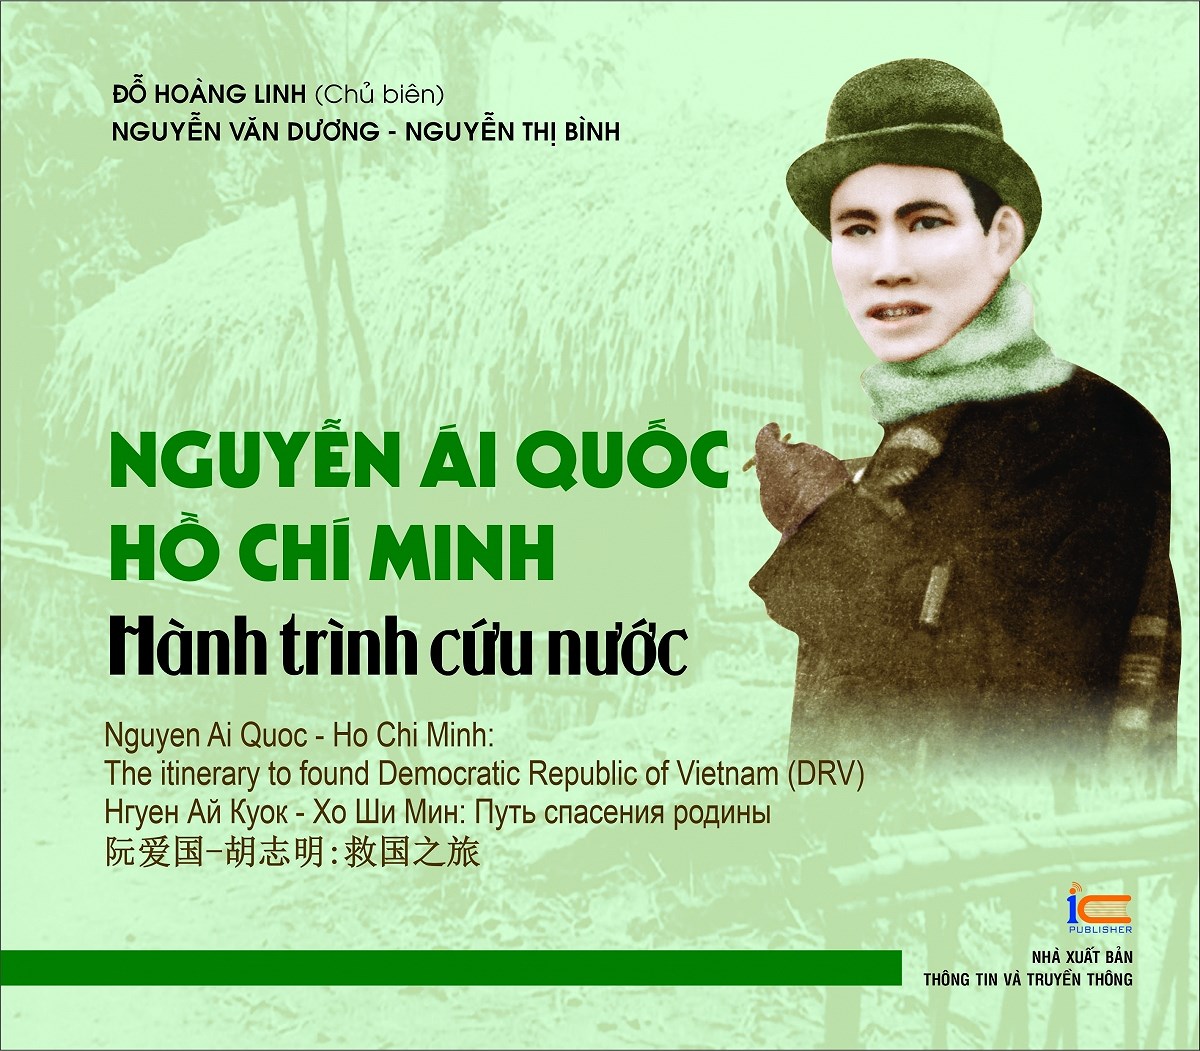 Опубликована фотокнига «Нгуен Аи Куок - Хо Ши Мин: путь во имя спасения страны» hinh anh 1